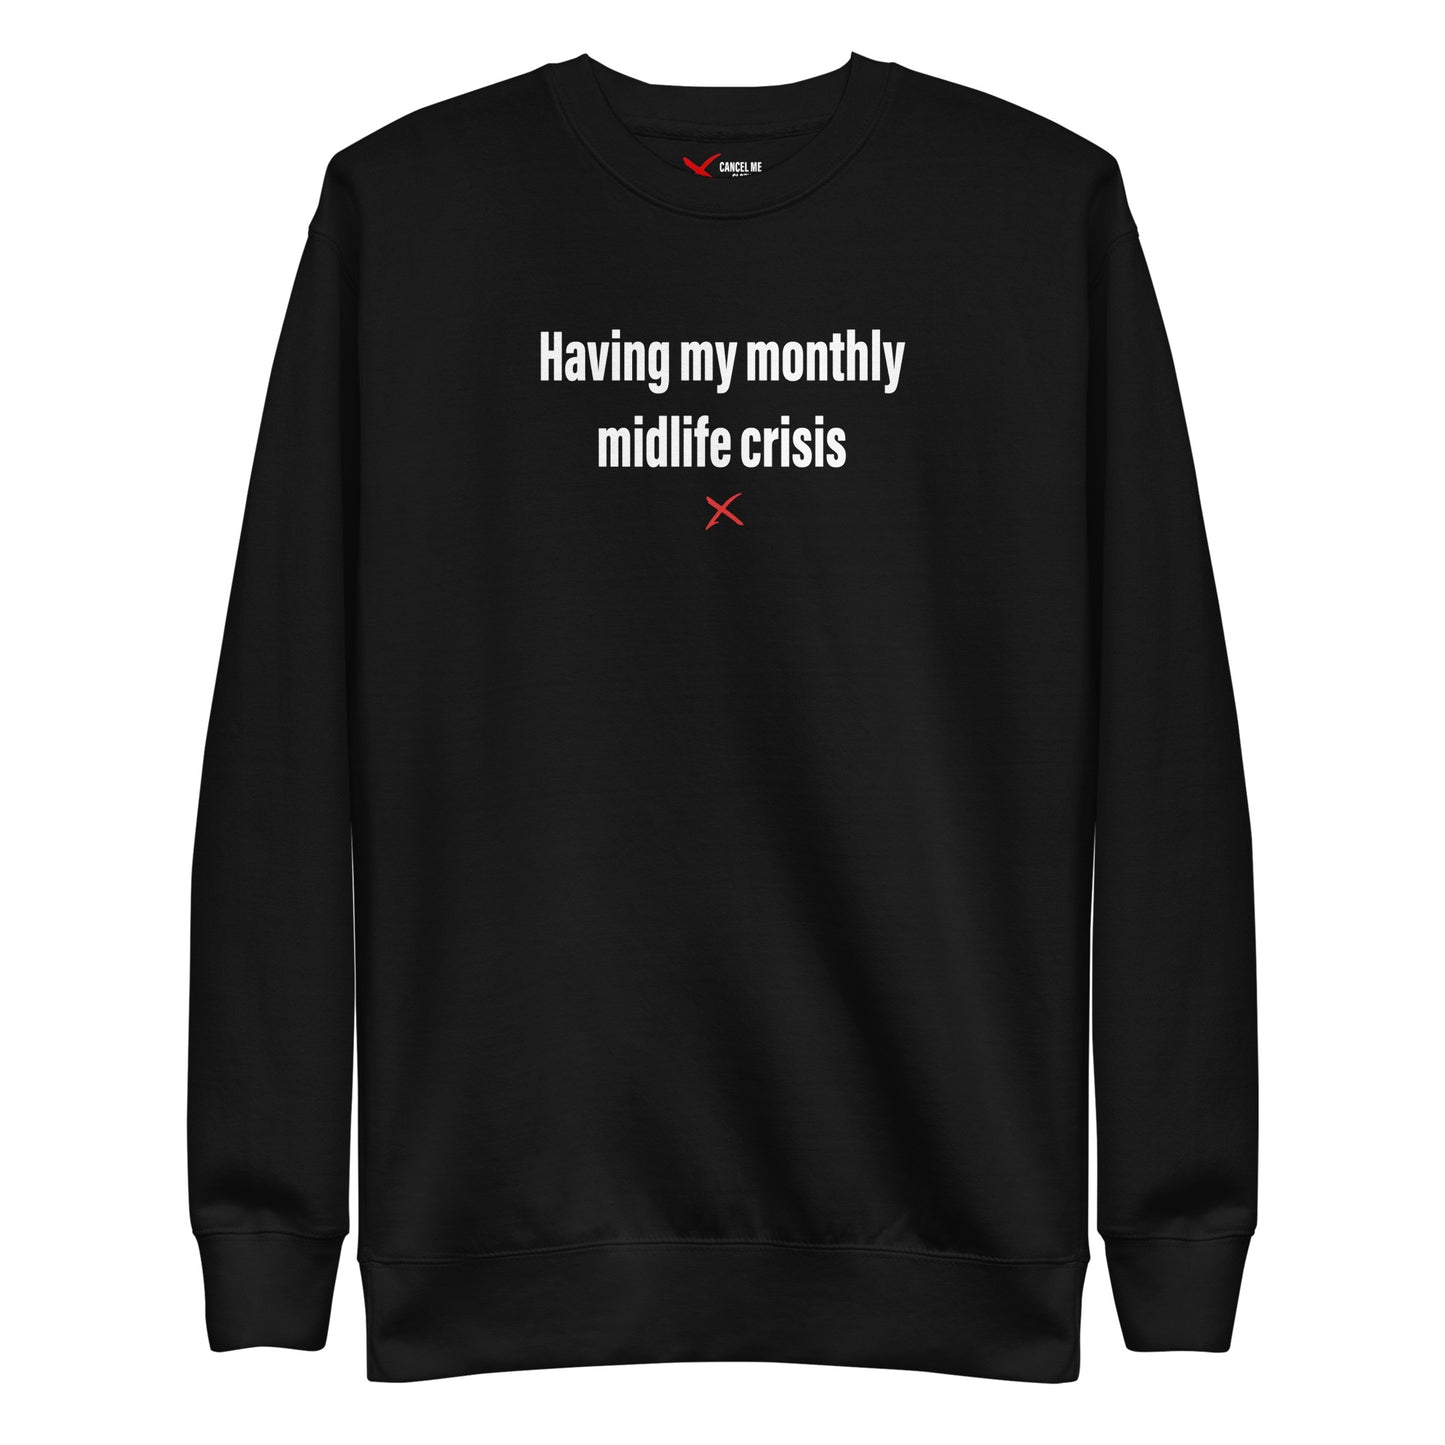 Having my monthly midlife crisis - Sweatshirt